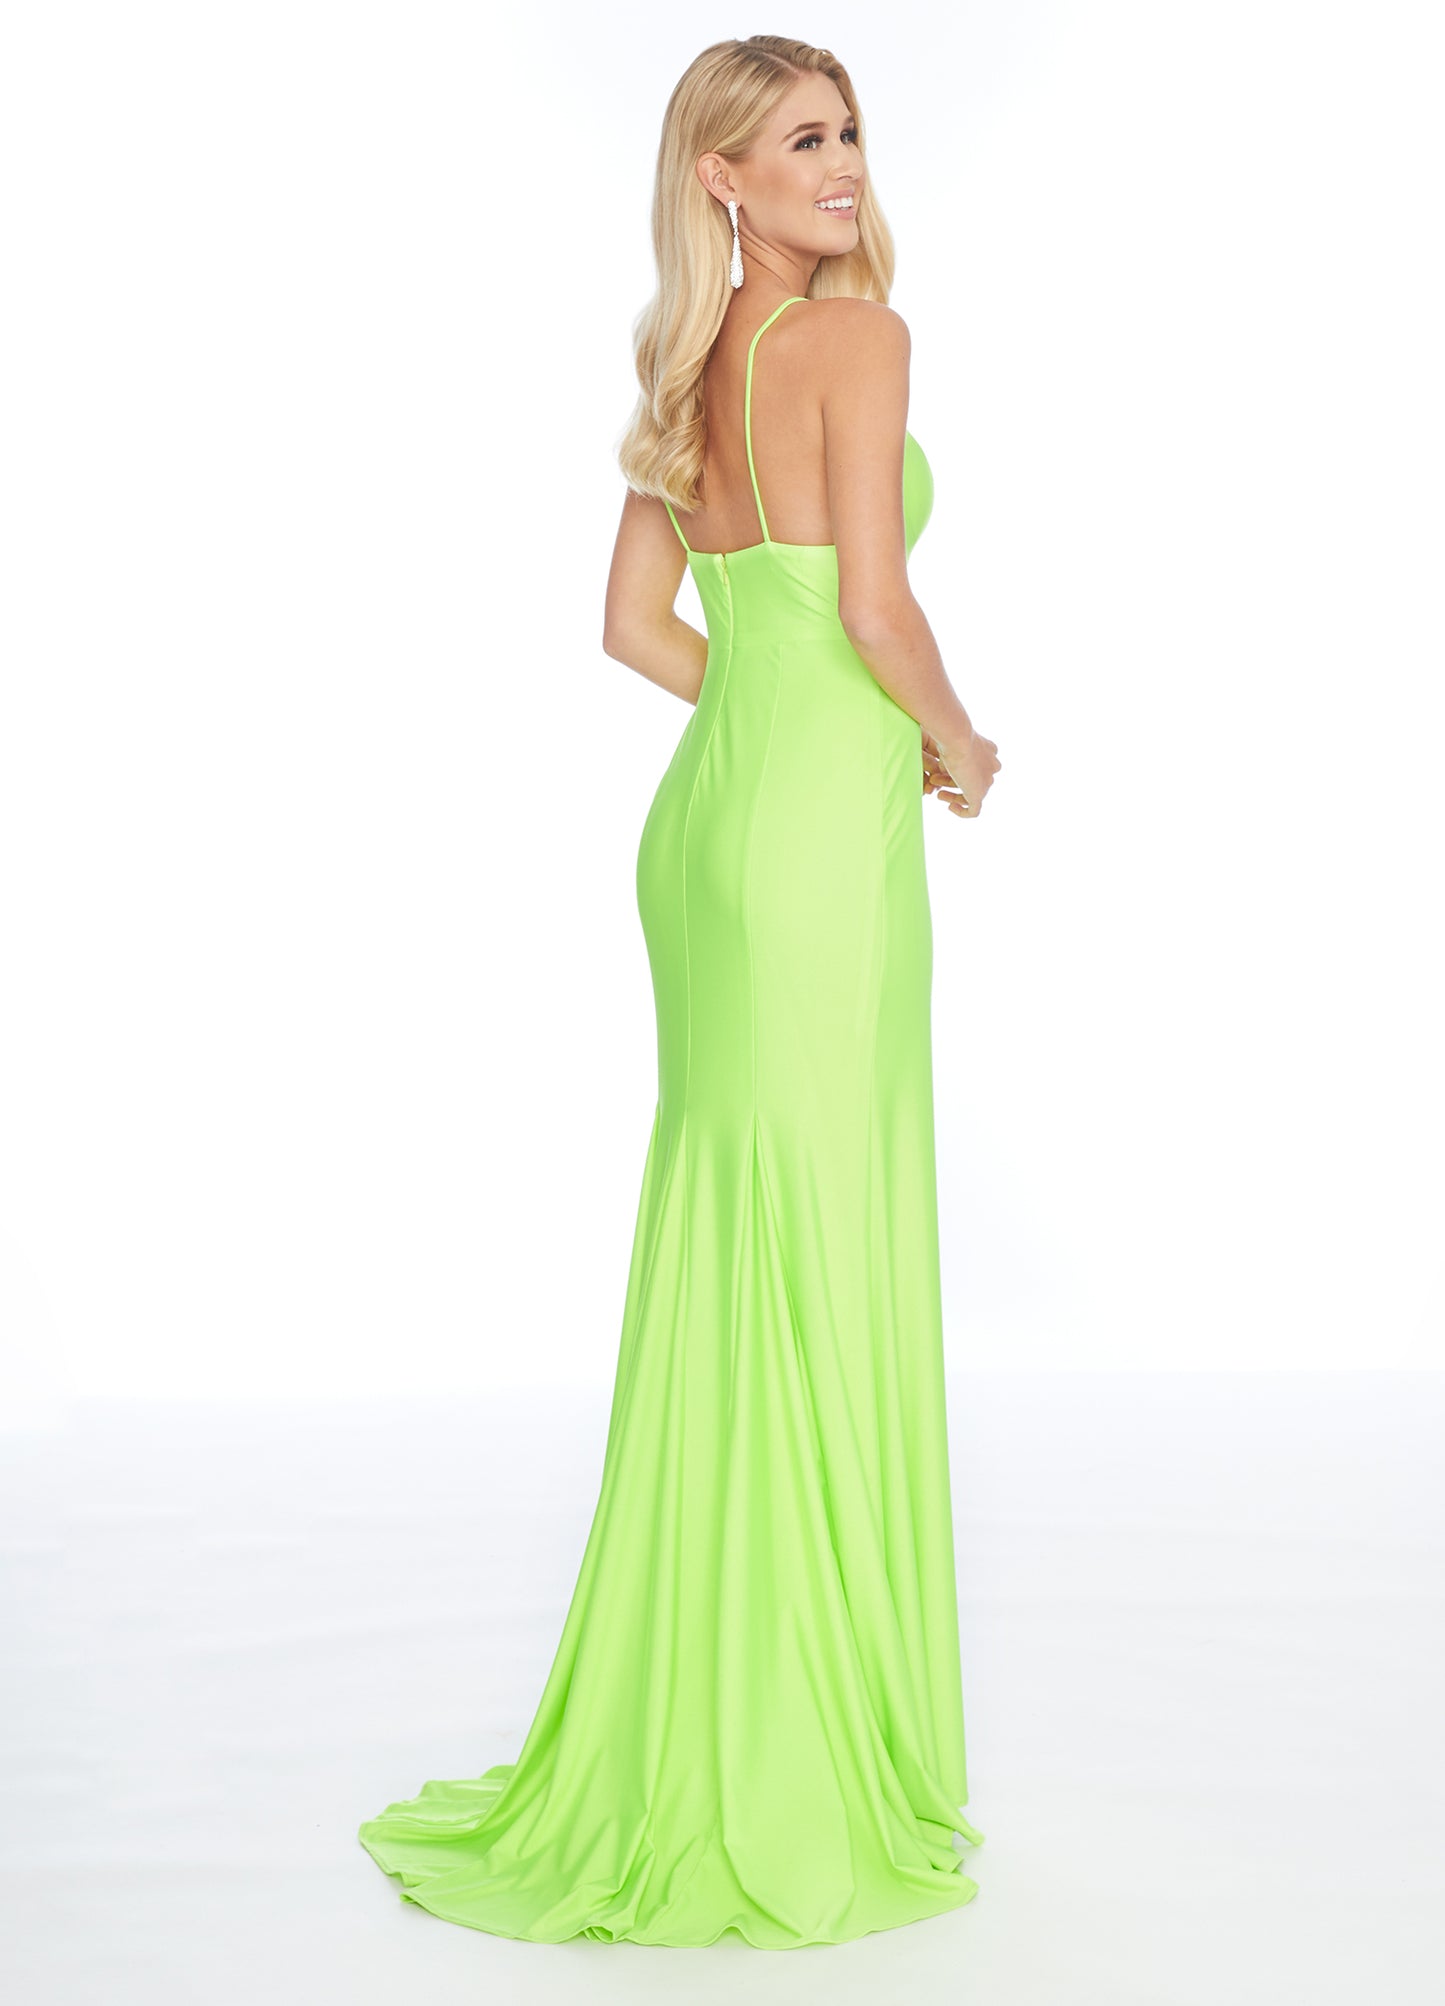 Ashley Lauren 1882 size 10 Turquoise Embellished Slit Prom Dress Pageant Gown V Neck